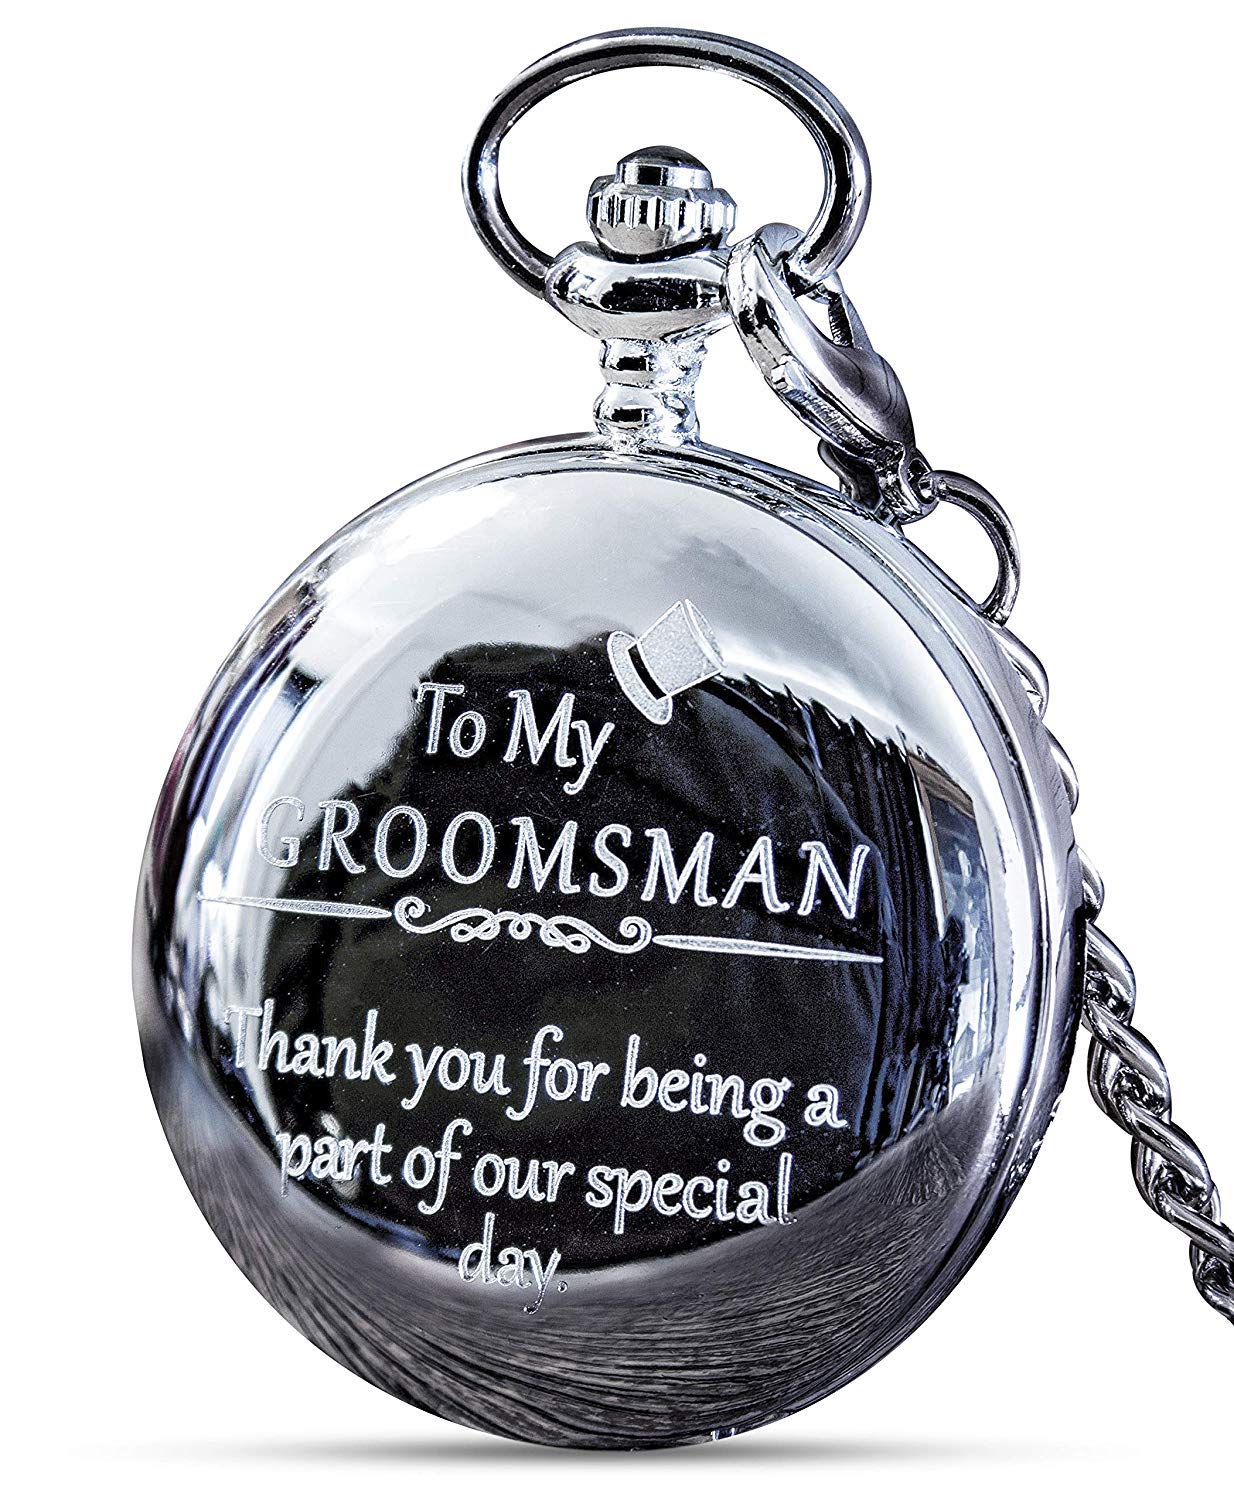 FJ FREDERICK JAMES Groomsmen Gifts for Wedding or Proposal - Engraved to My Groomsman Pocket Watch - Luxury Wedding Gift